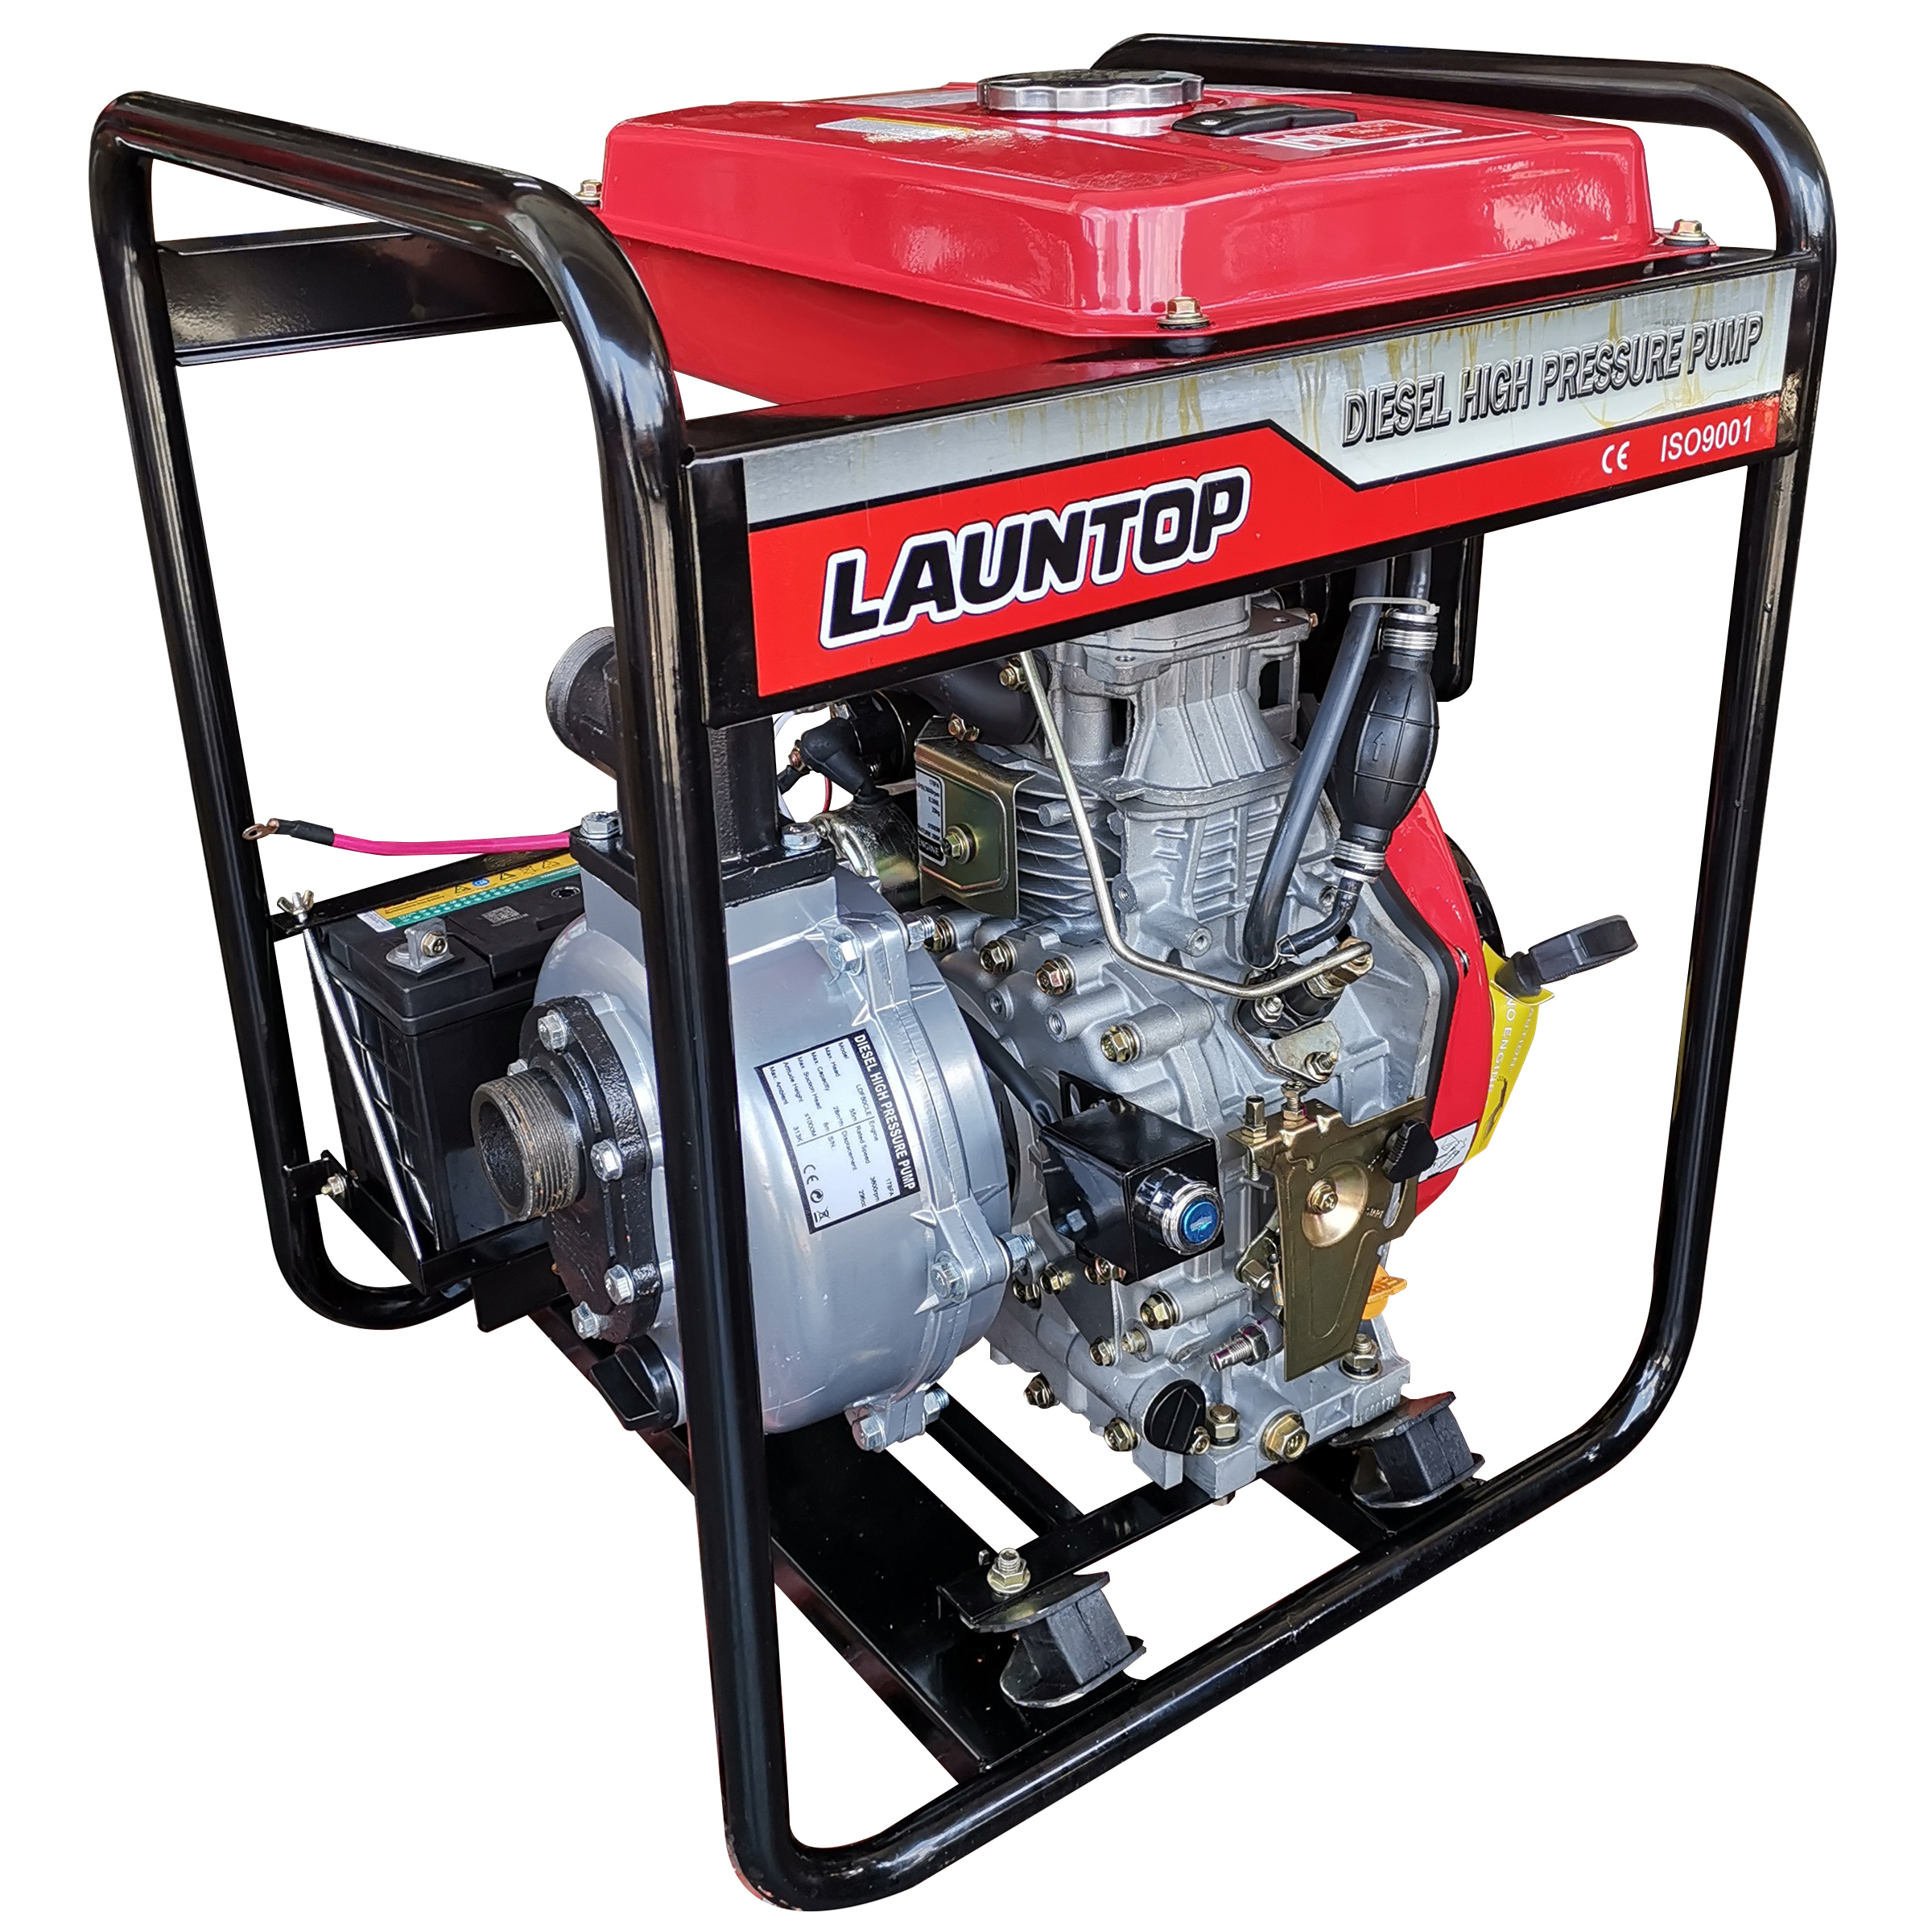 Launtop LDF80CLE: Water Pump with Diesel Engine